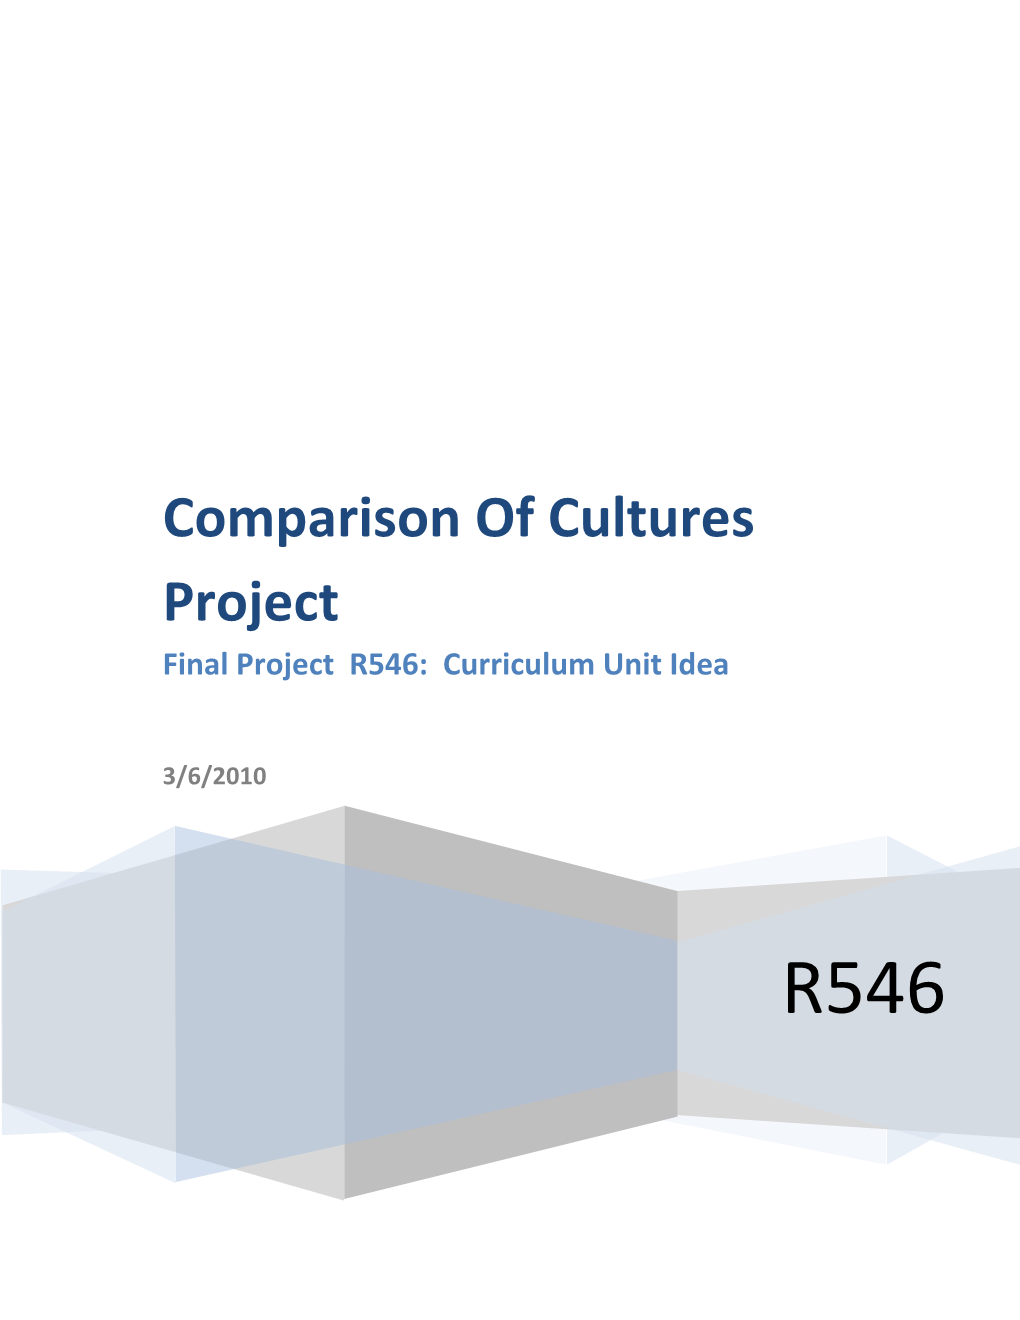 Comparison of Cultures Project